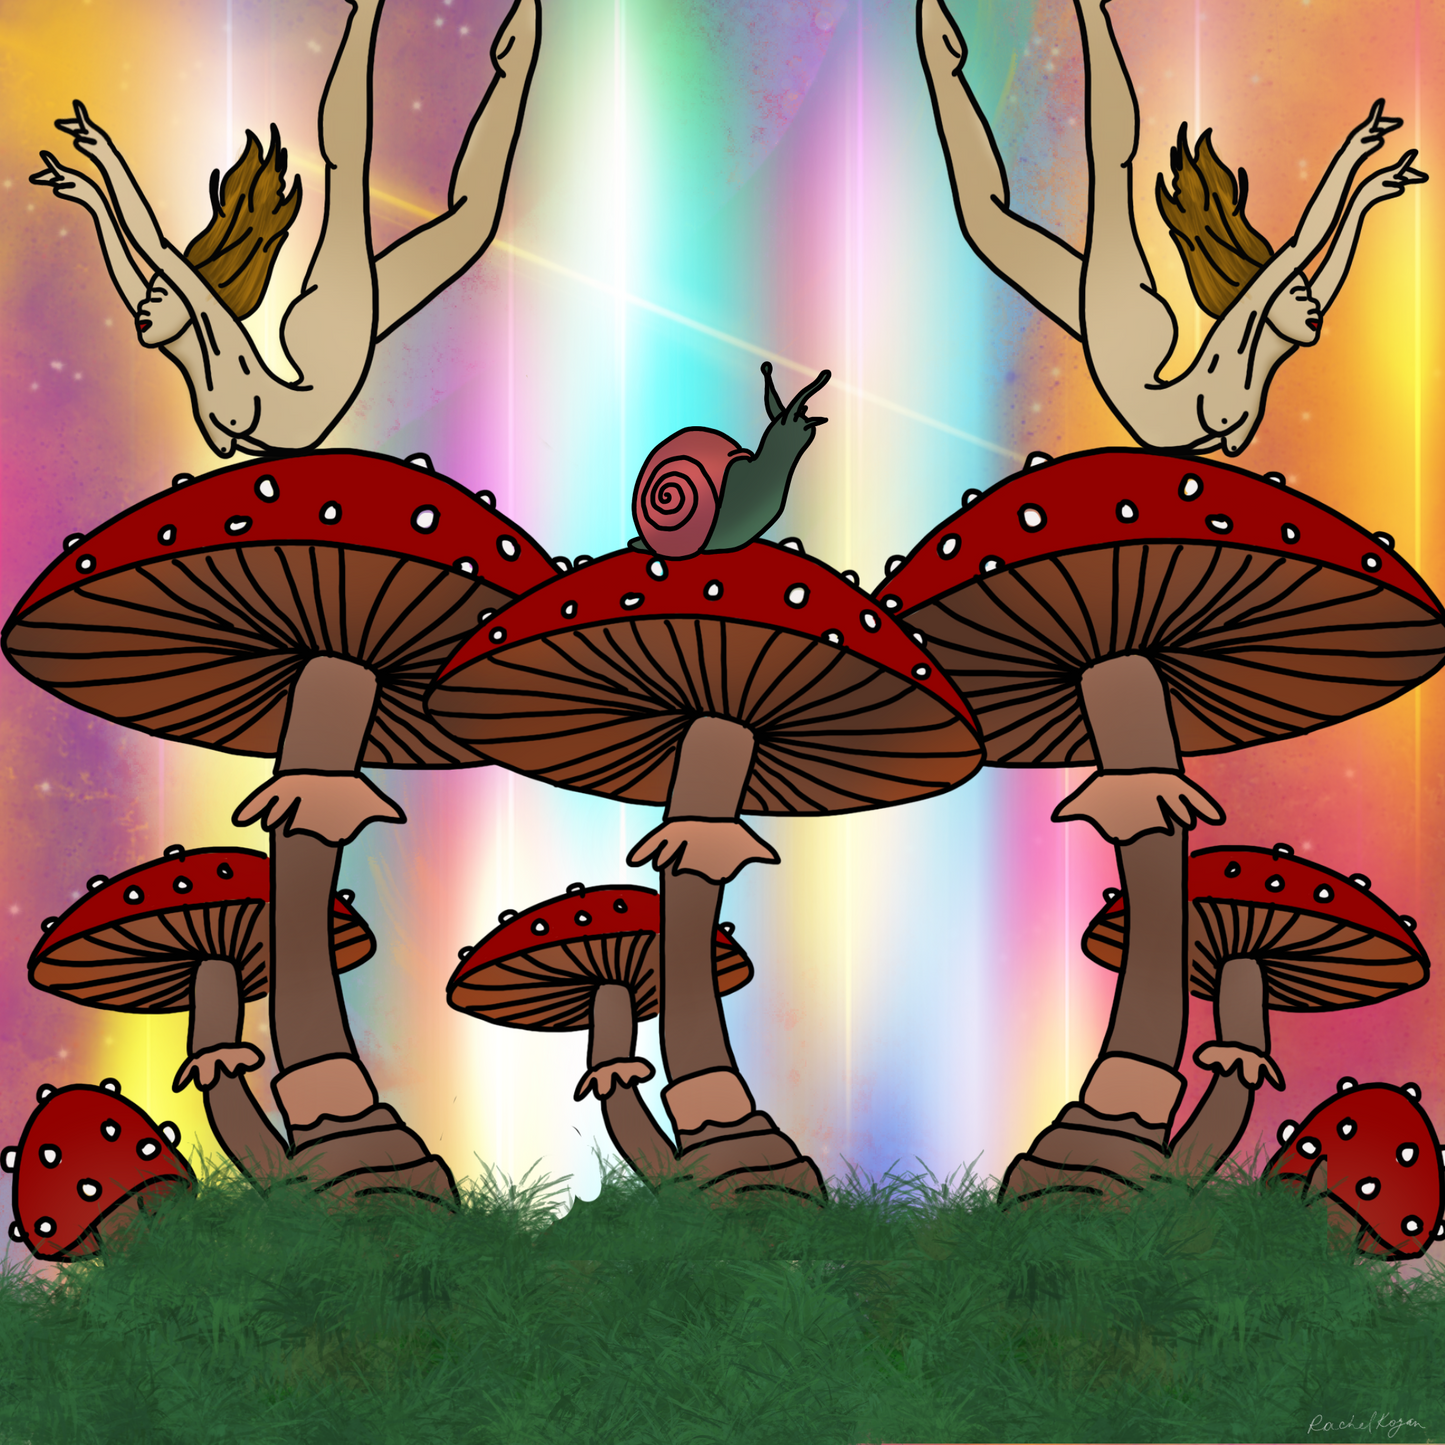 Naked amanita mushroom chics with snail friends print